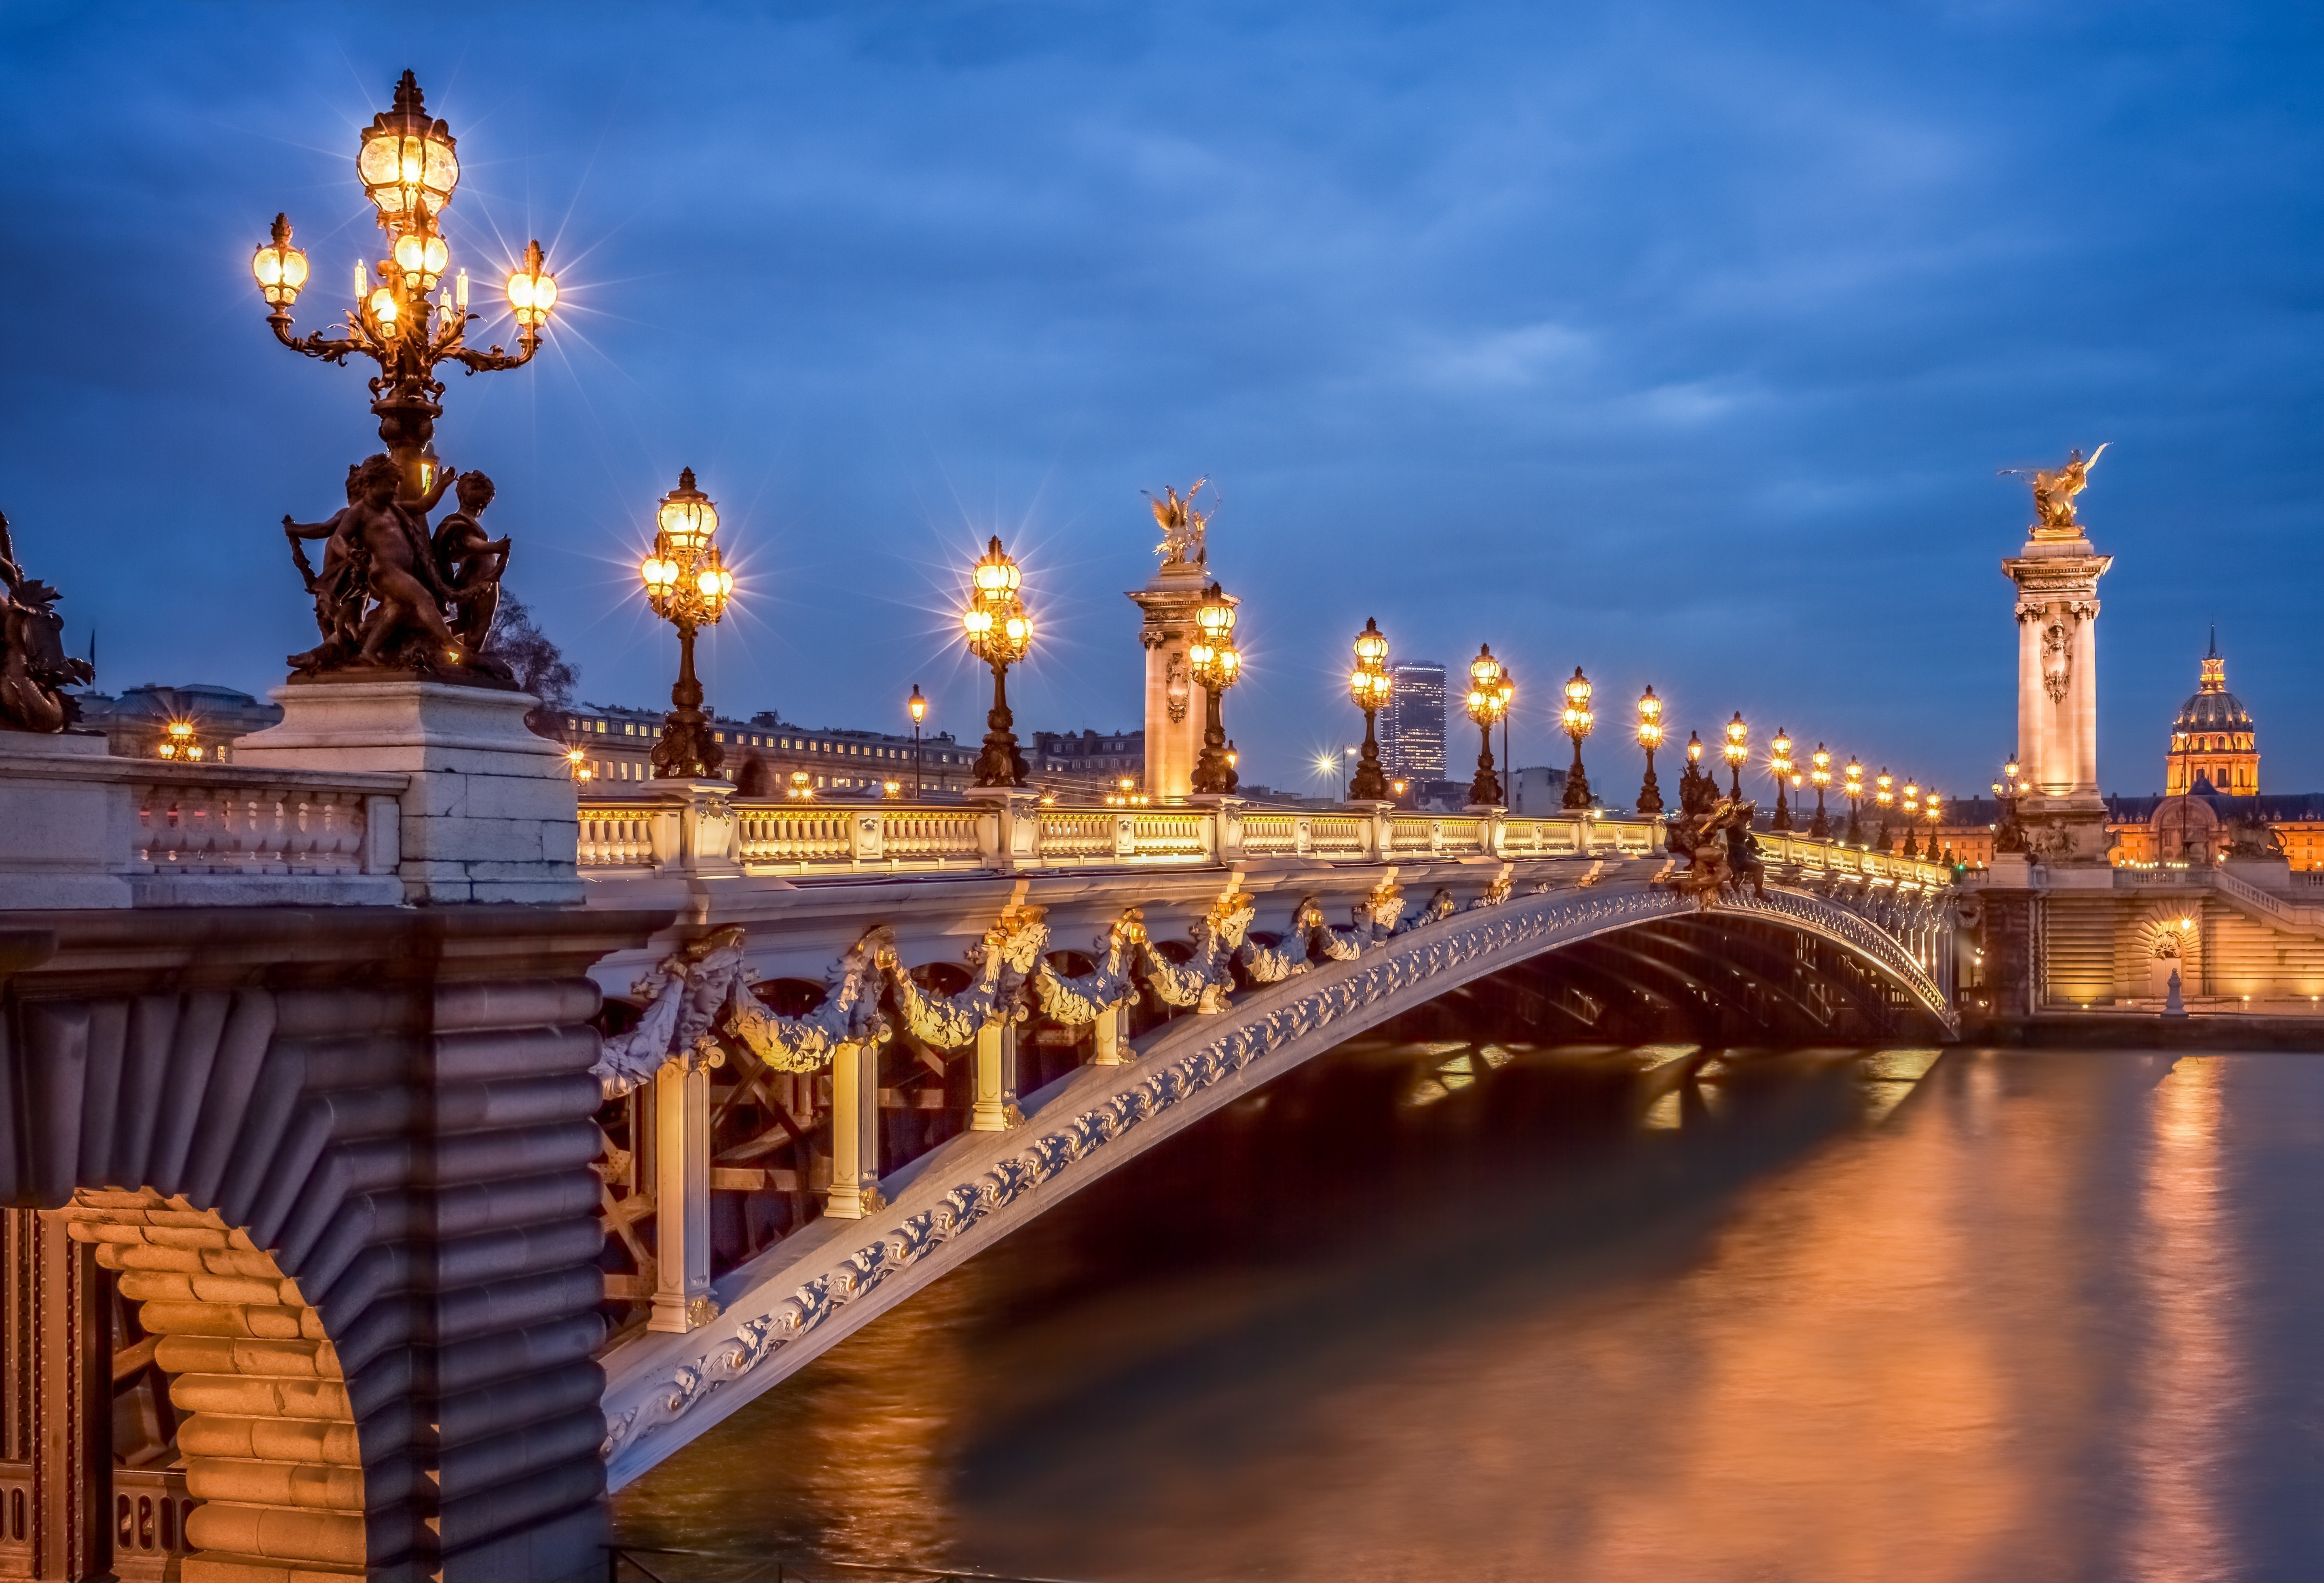 Pont Alexandre III in Paris - Bridges - Architecture - Categories